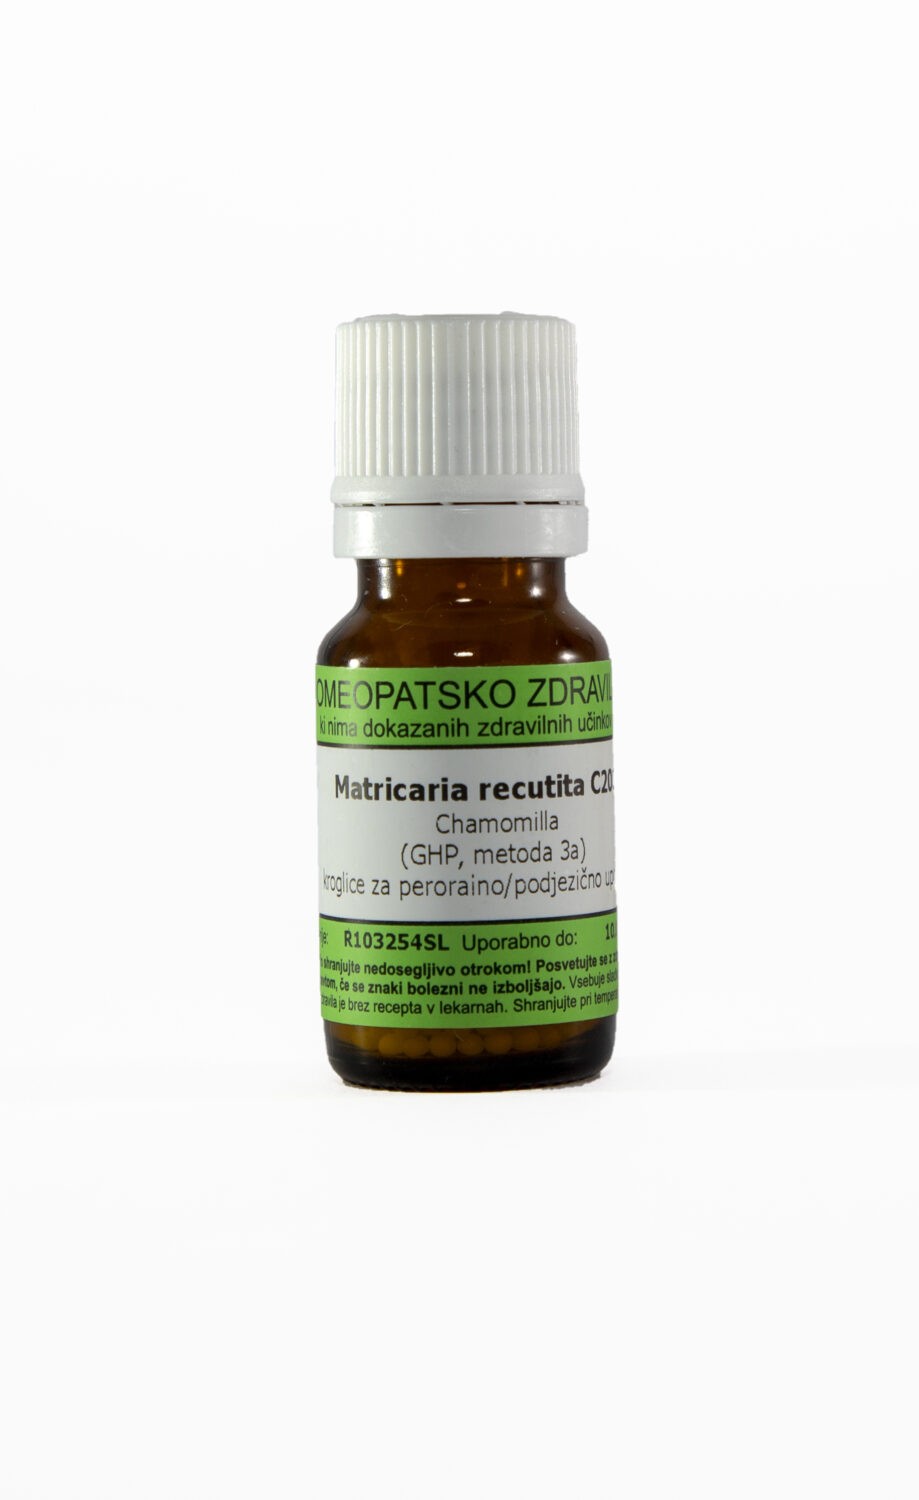 Matricaria recutita C12 homeopatske kroglice, 1 g